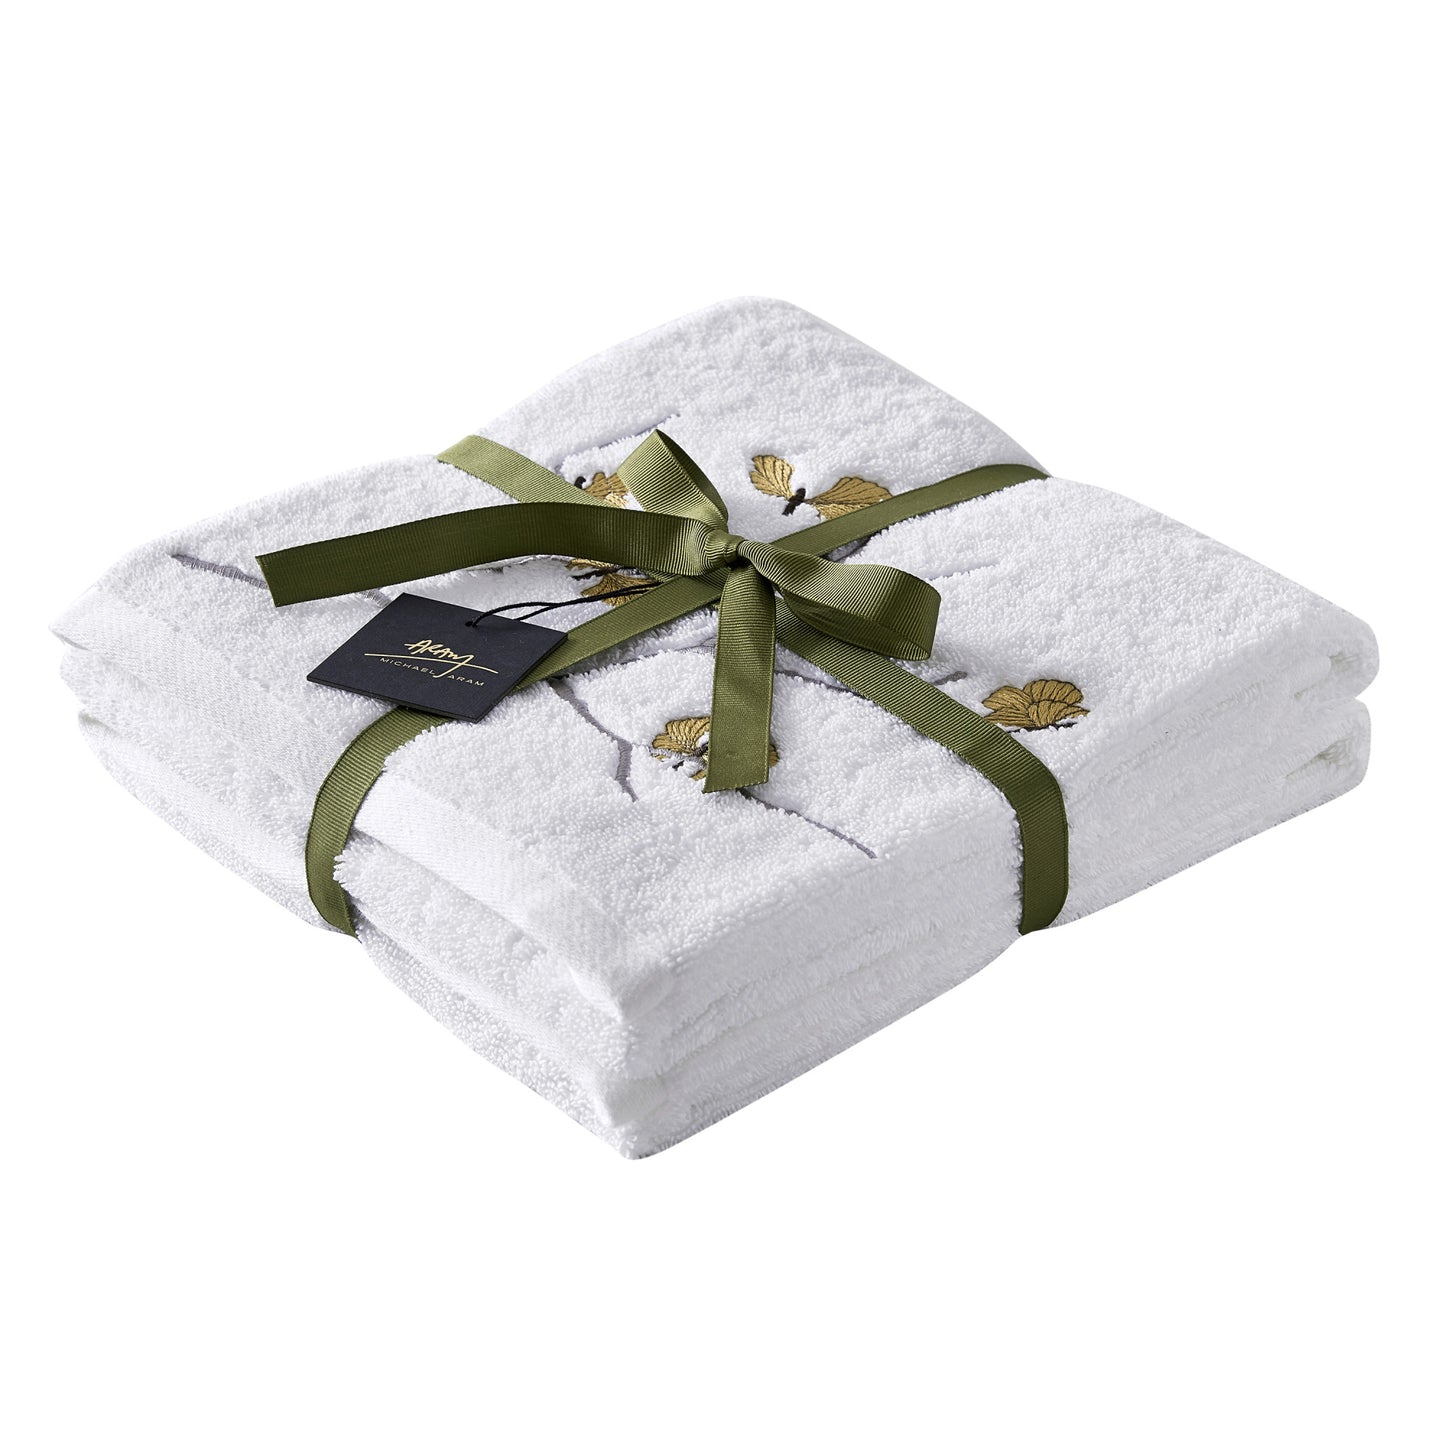 Michael Aram Butterfly Gingko Towel Set